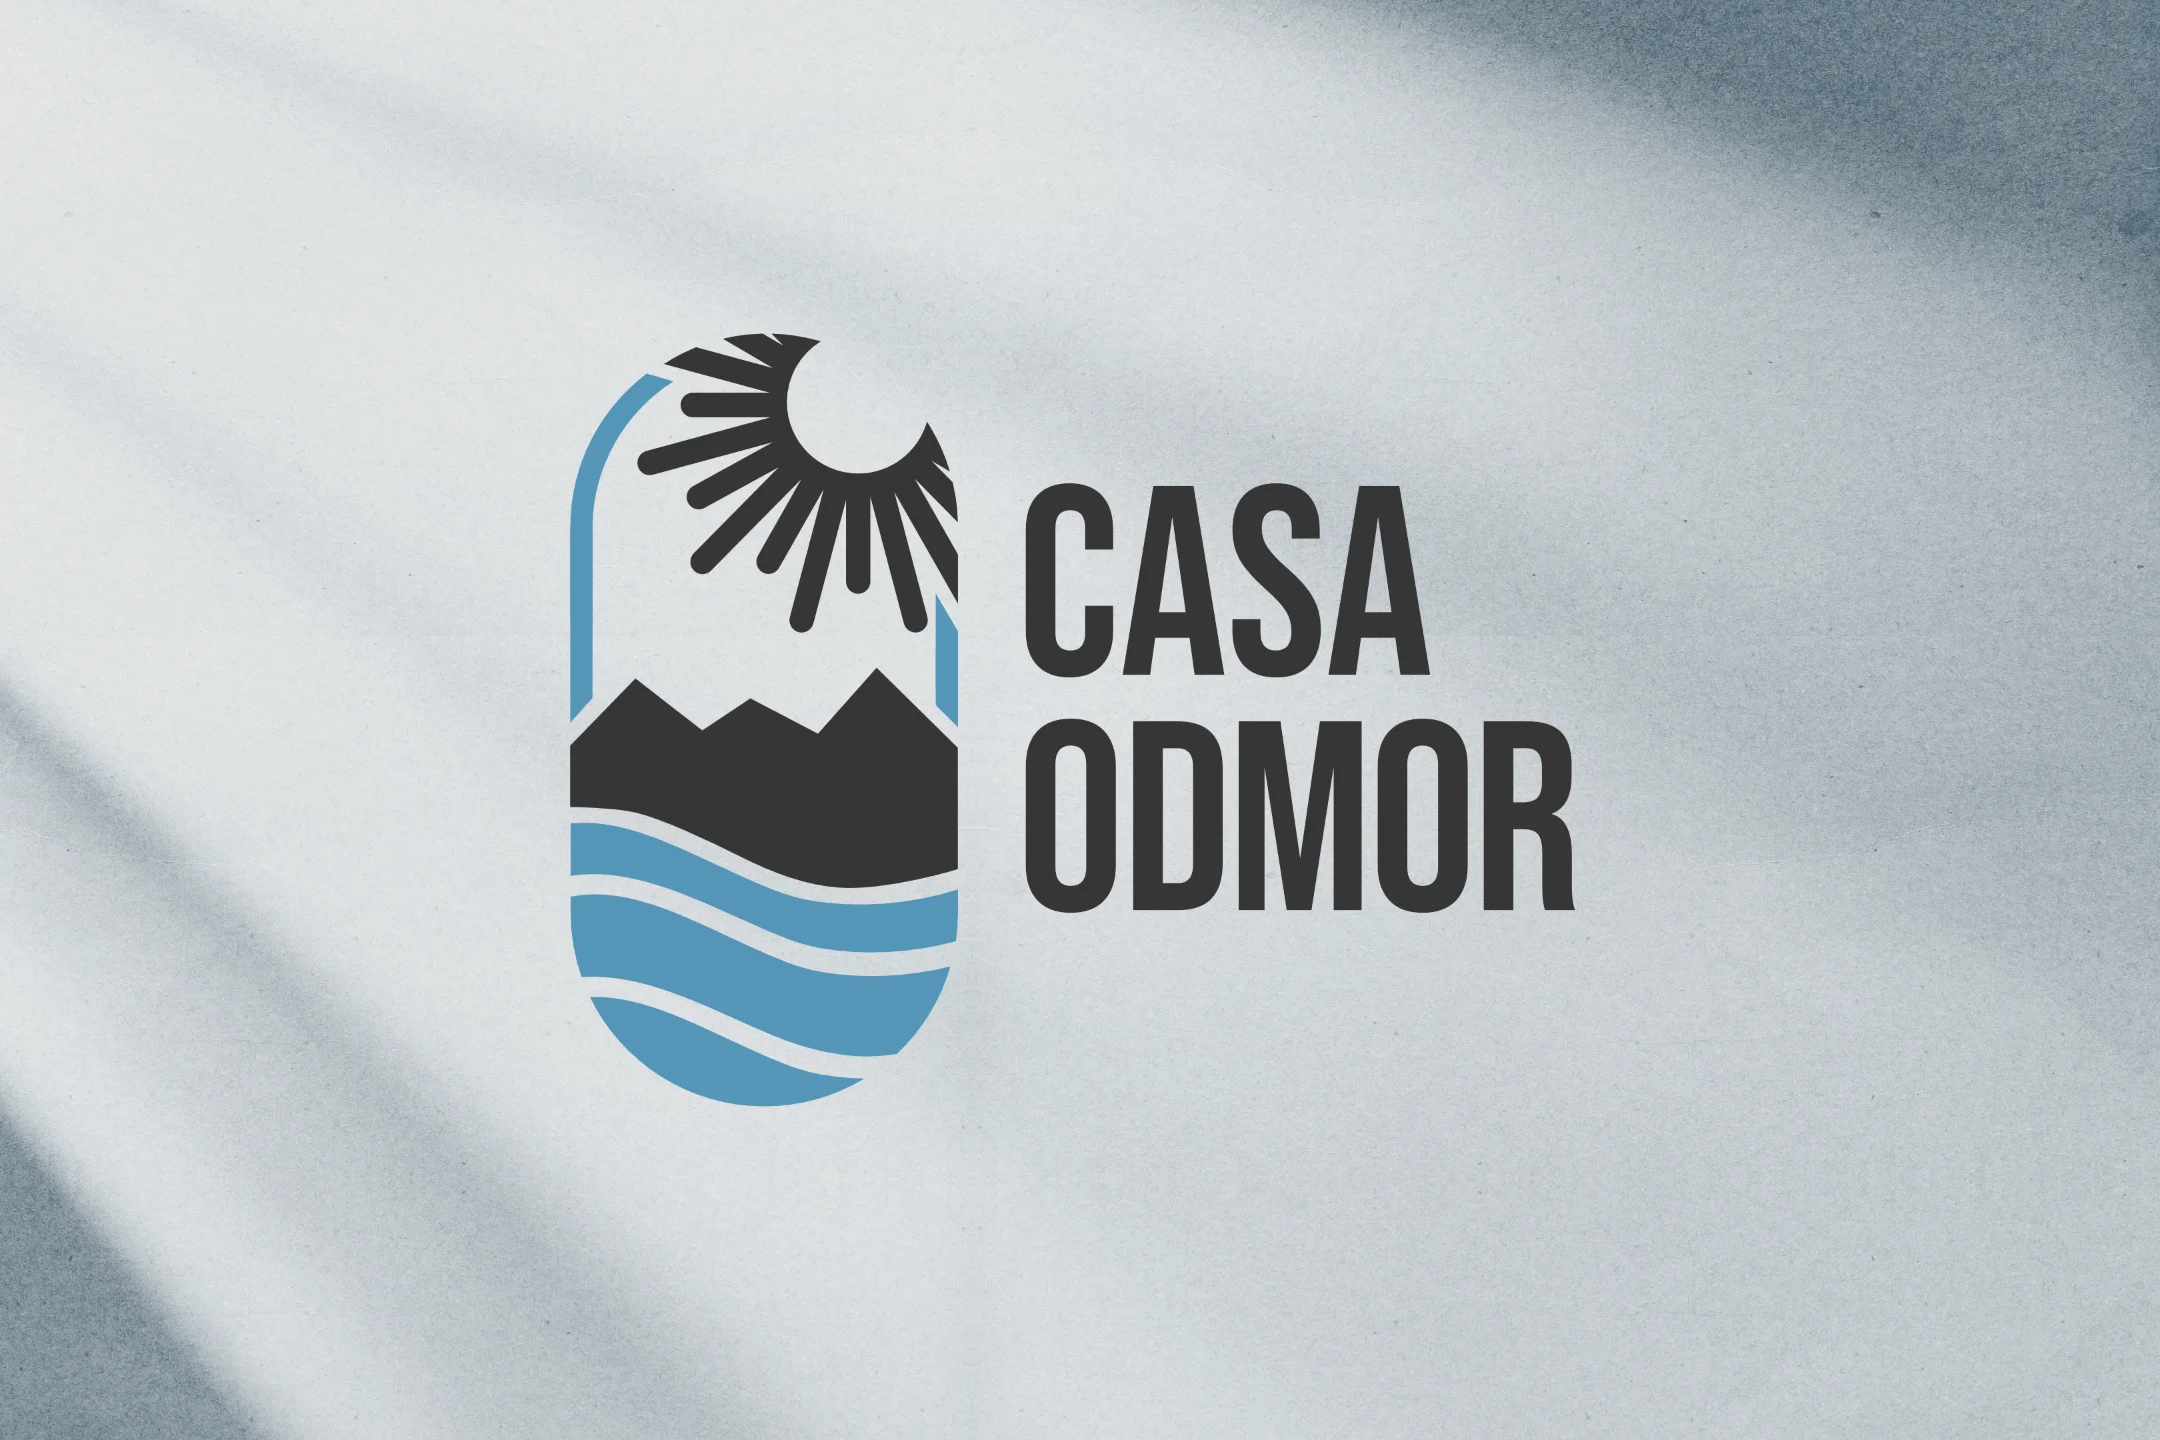 Casa Odmor logo & brand identity for case study